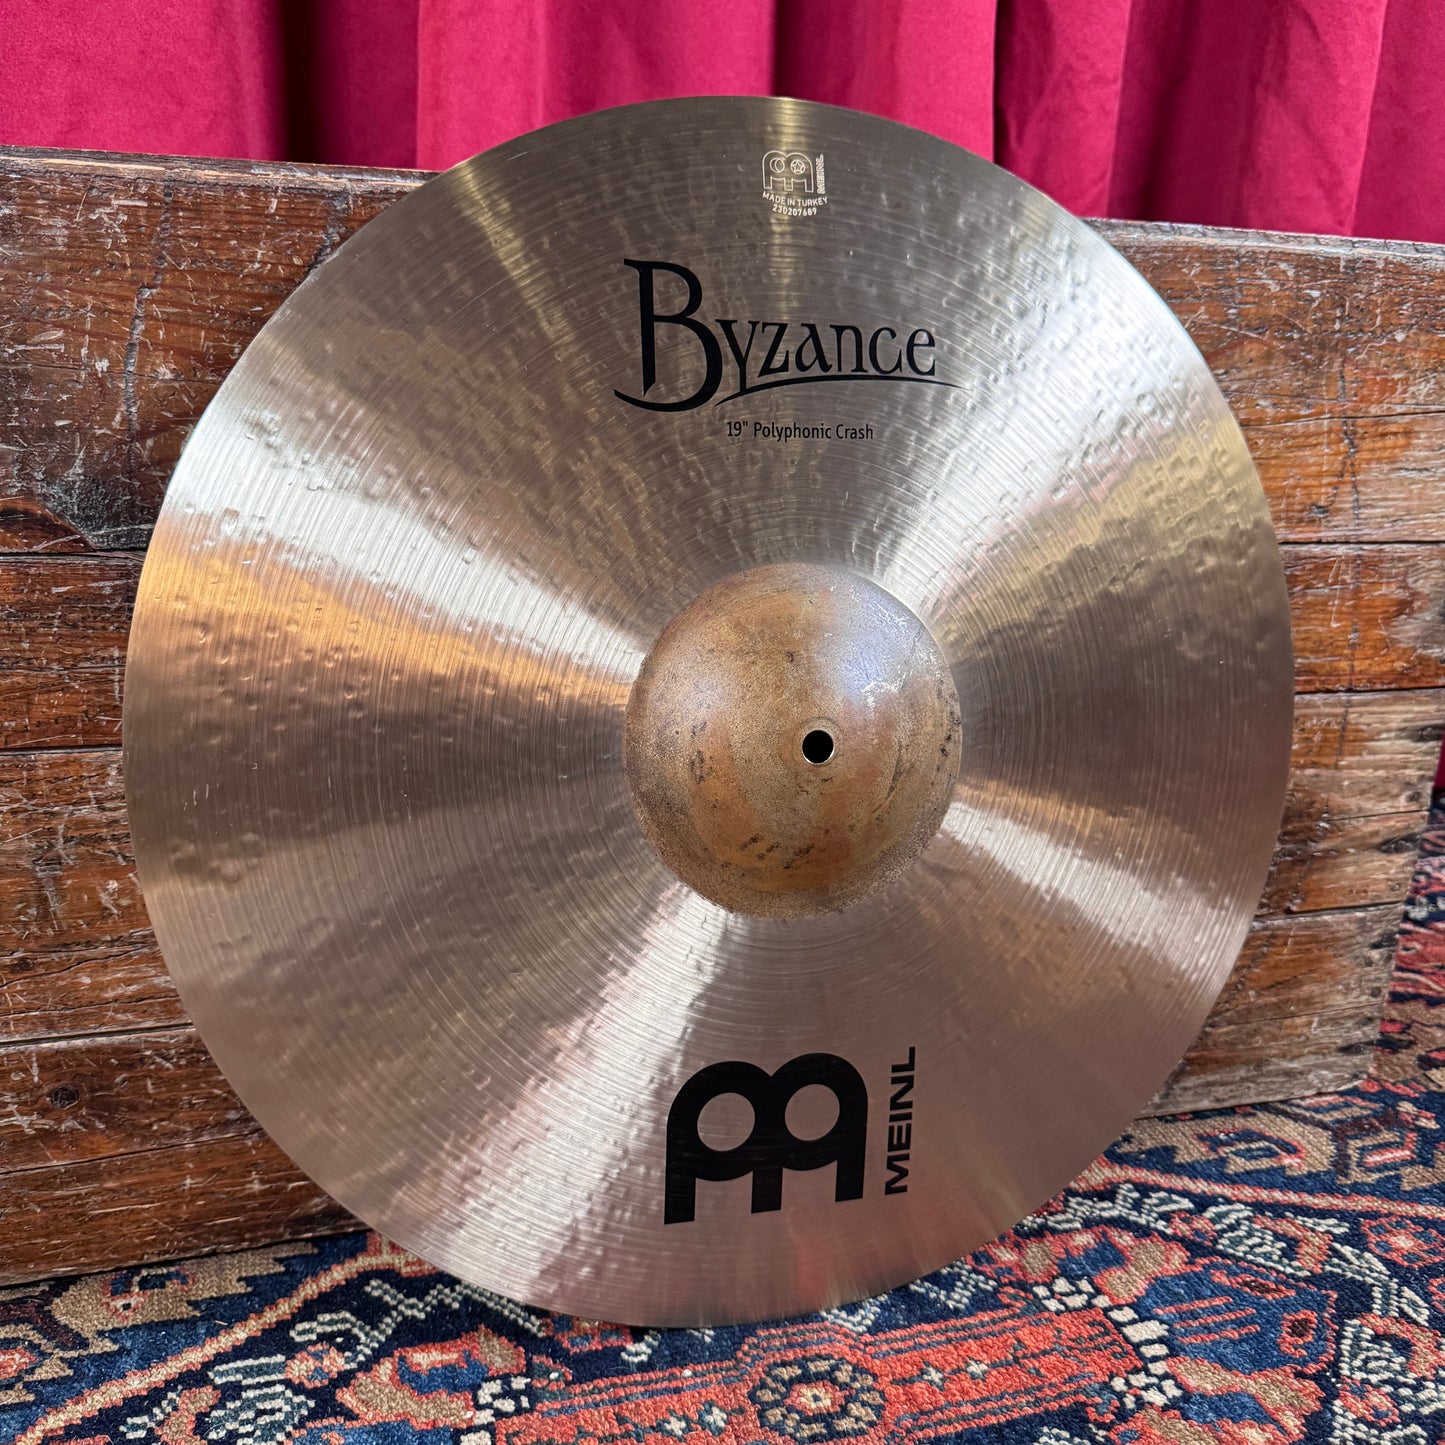 19" Meinl Byzance Traditional Polyphonic Crash Cymbal 1632g *Video Demo*